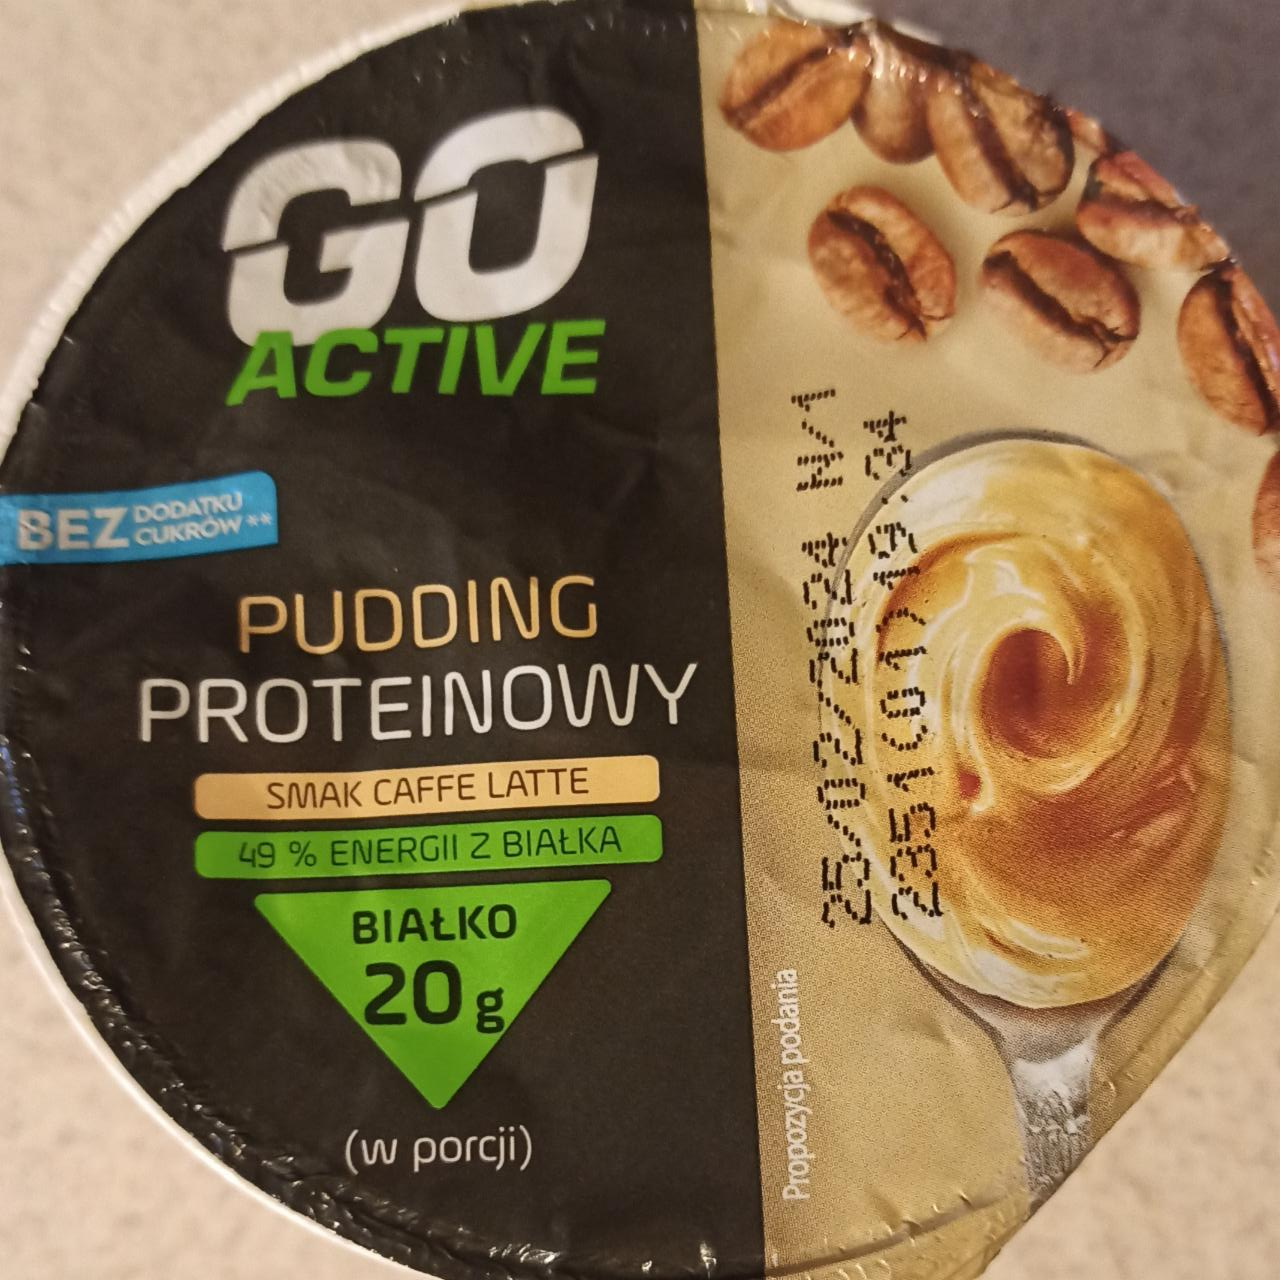 Fotografie - Pudding proteinowy smak Caffe Latte Go Active